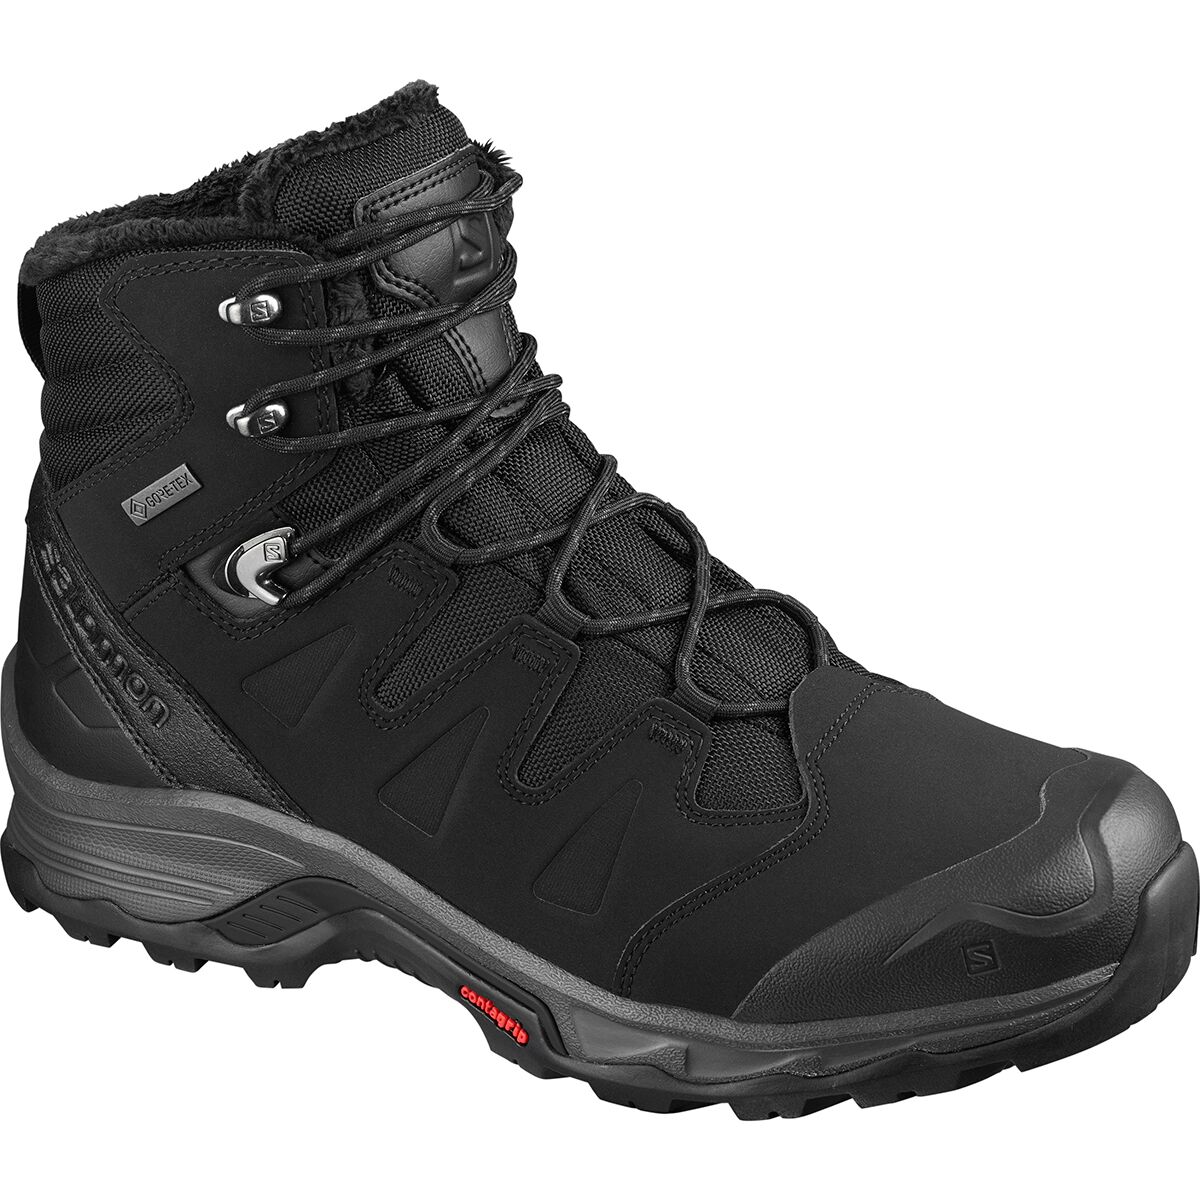 men's winter hiking boots